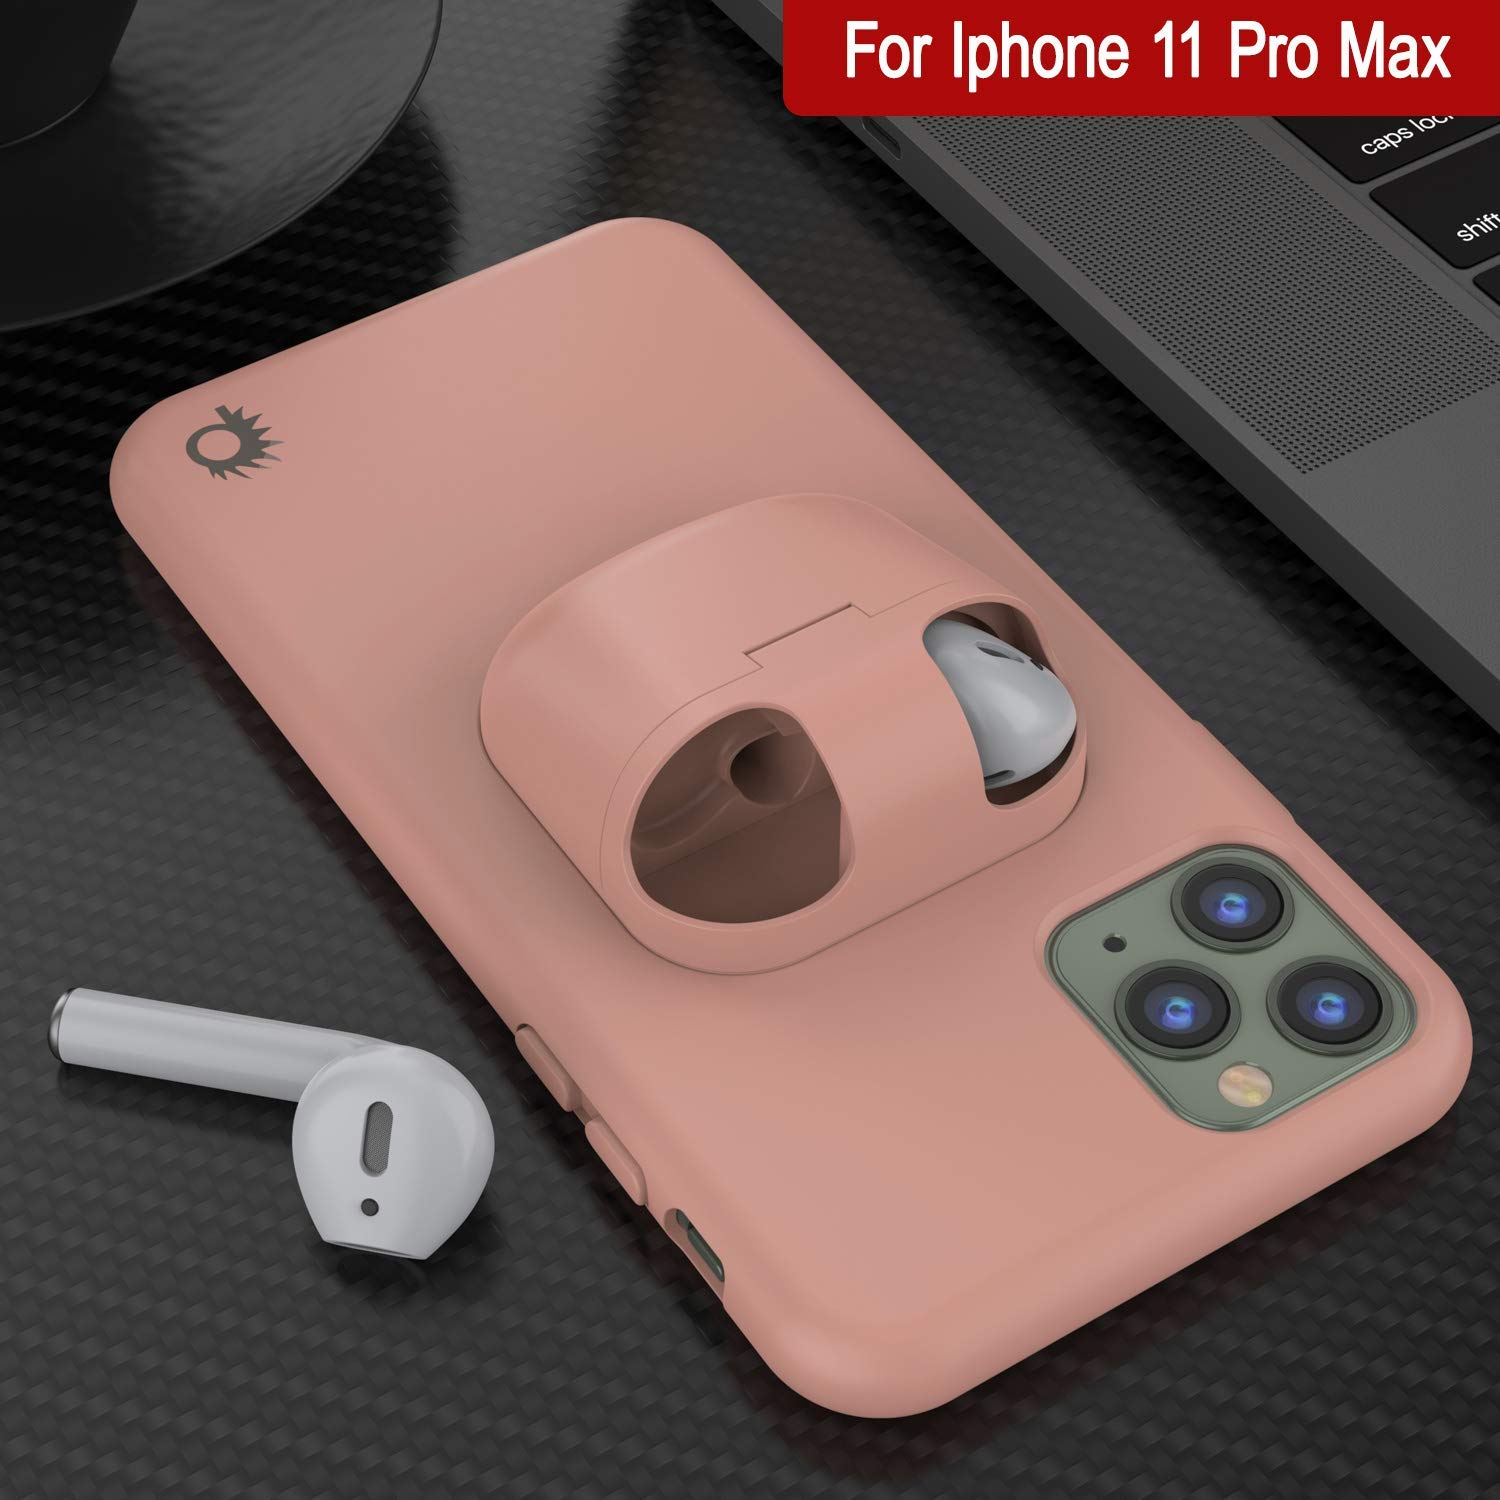 Silicone Case iPhone 13 Pro Max Color Rosa - iPhone Store Cordoba